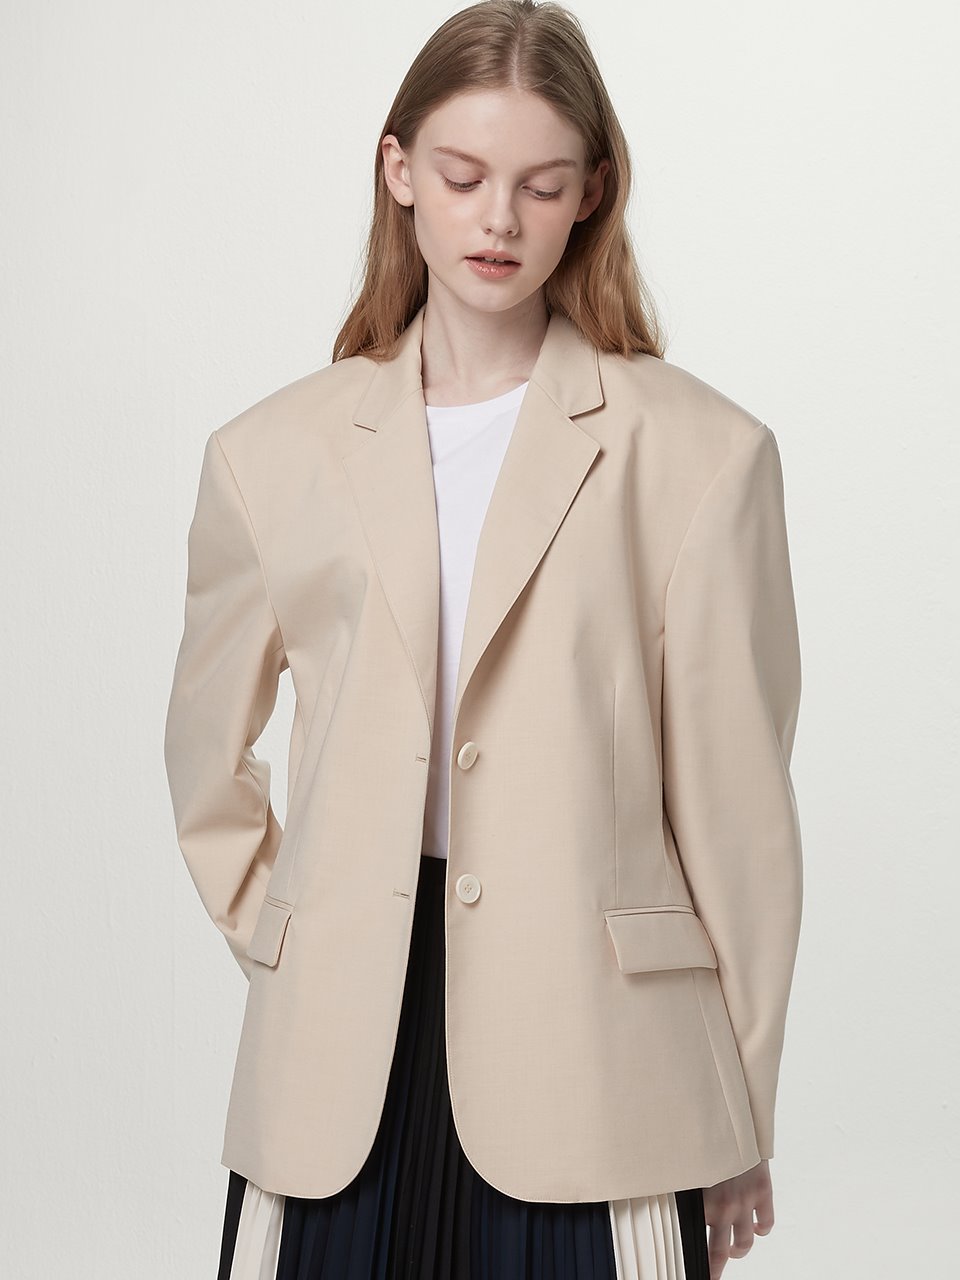 Single suit jacket - Cream beige